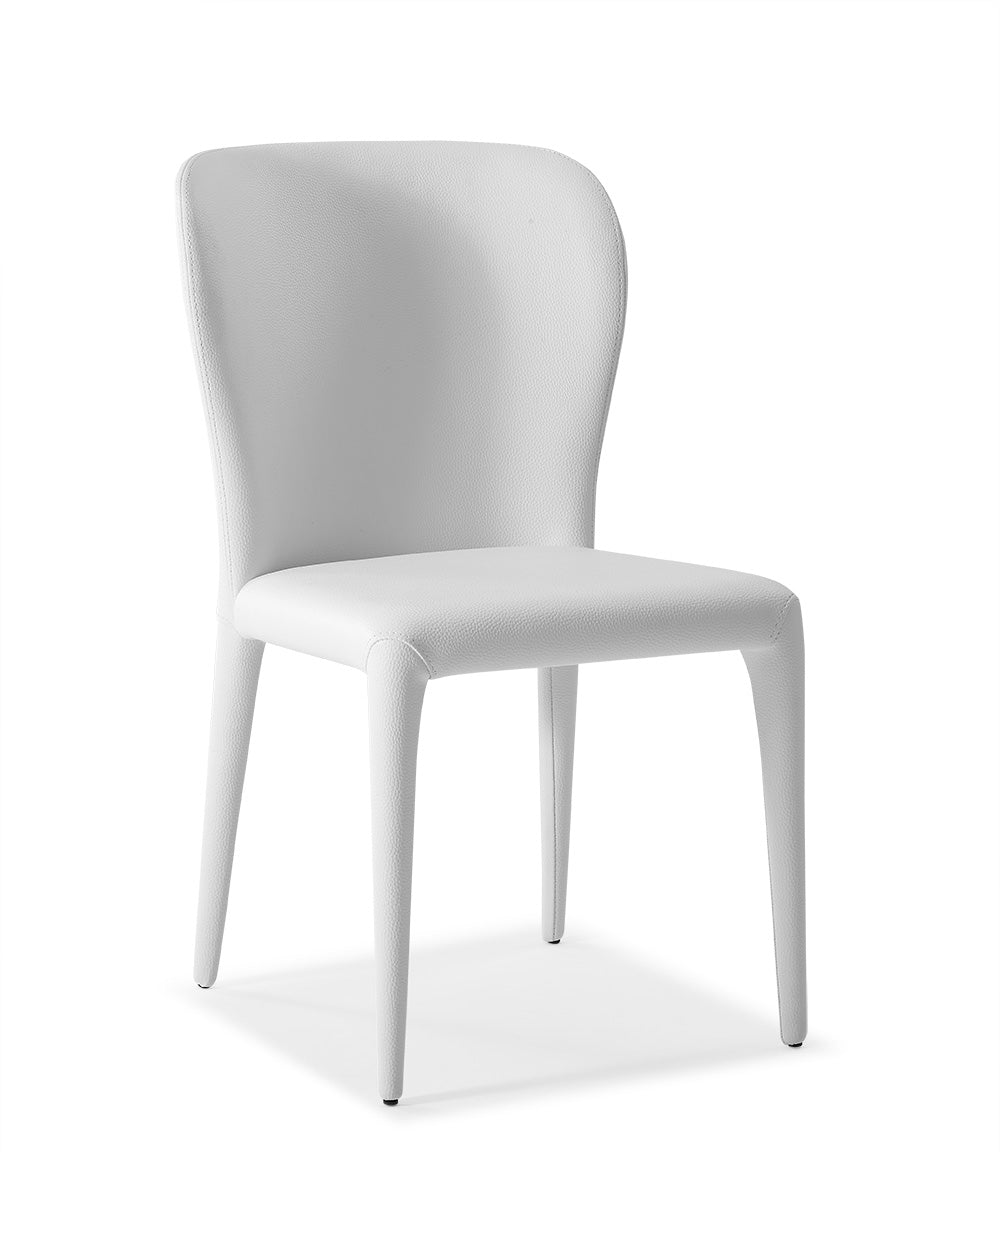 Hazel Dining Chair White - Set of 2 by Whiteline